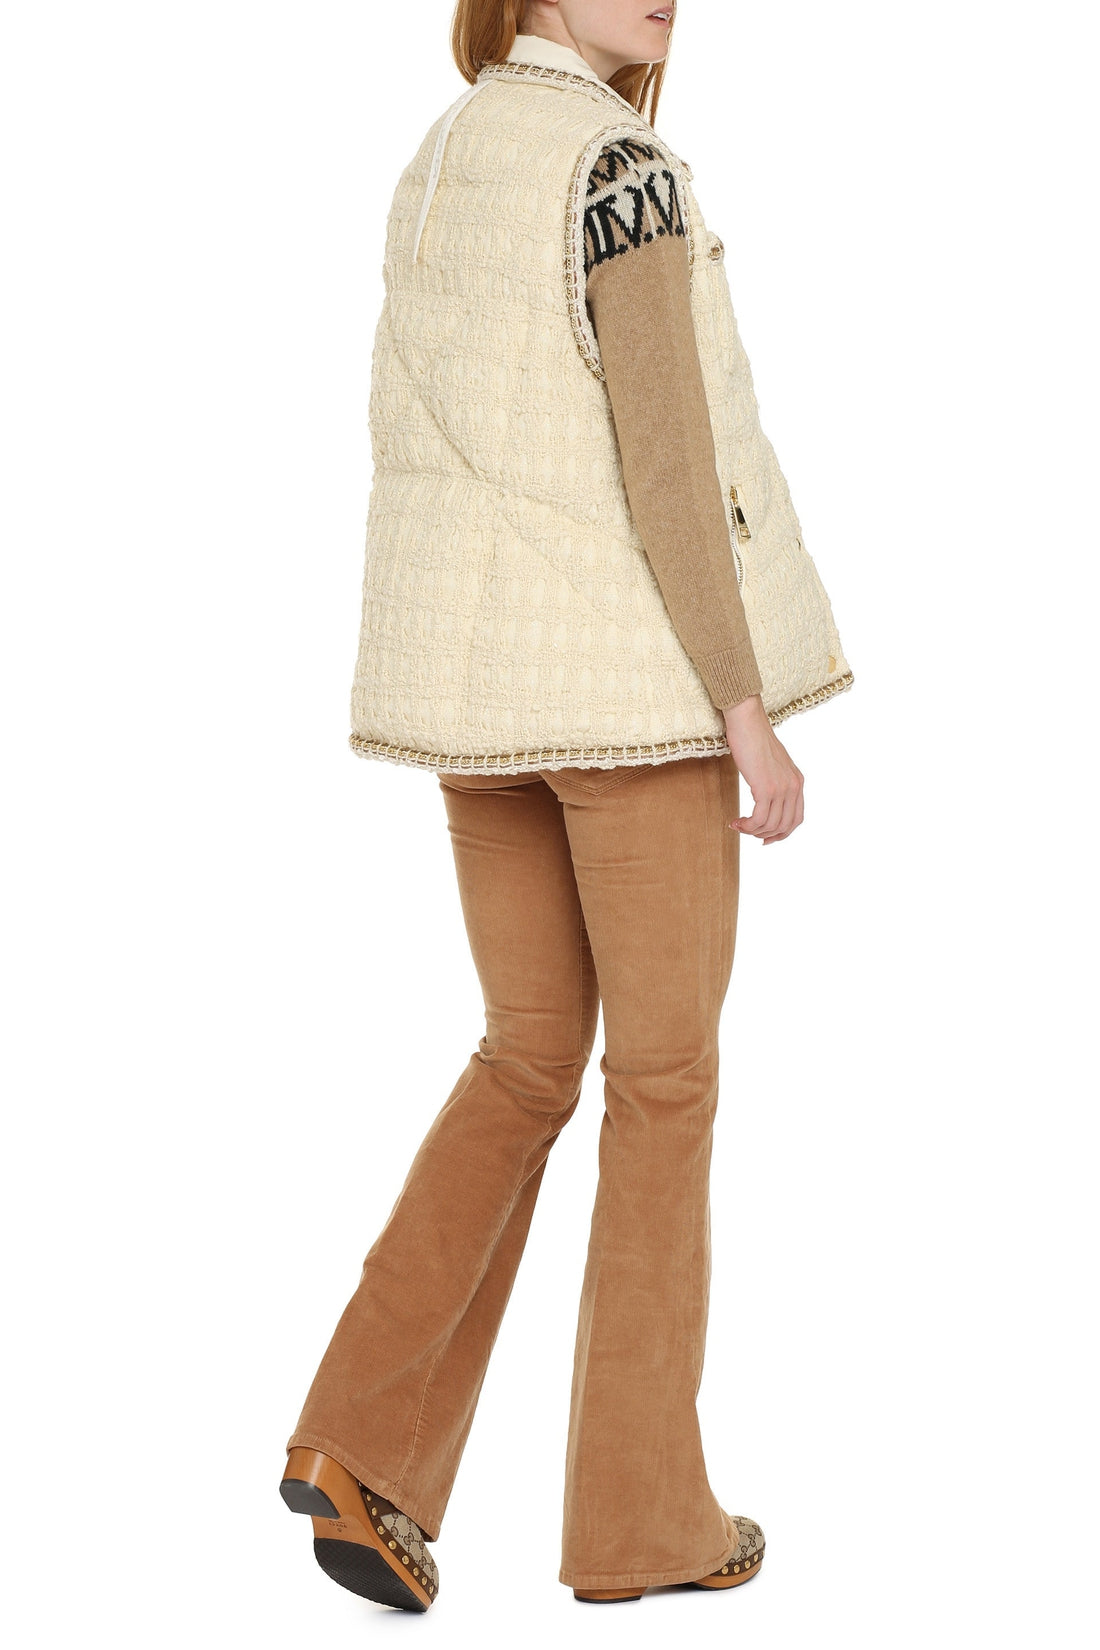 Khrisjoy-OUTLET-SALE-Sleeveless wool blend down jacket-ARCHIVIST